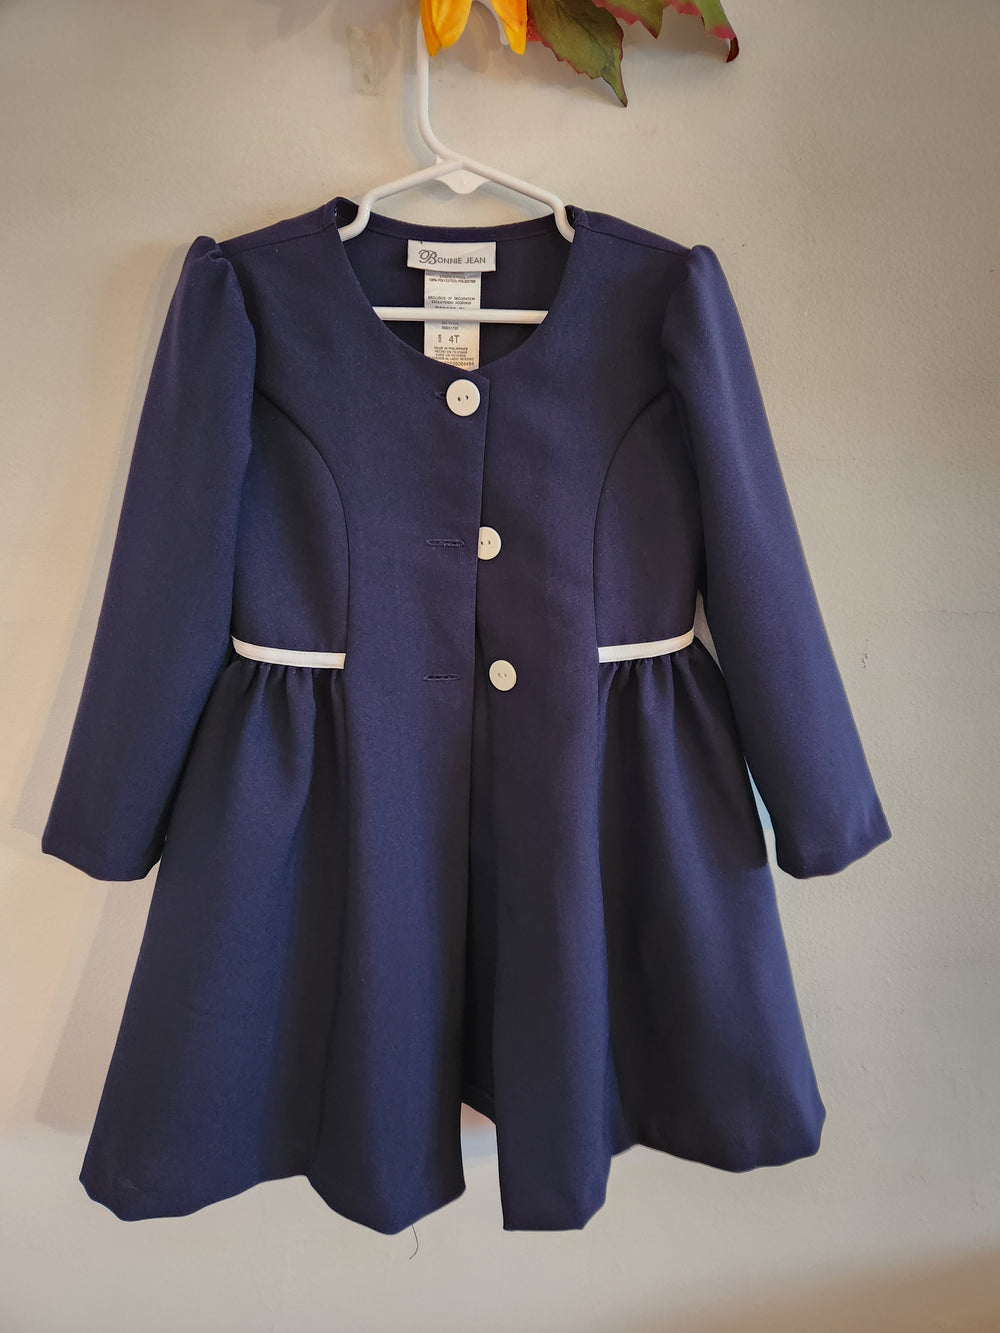 Peppermint Patty Dress Coat (Size 4T) Girl's Coat